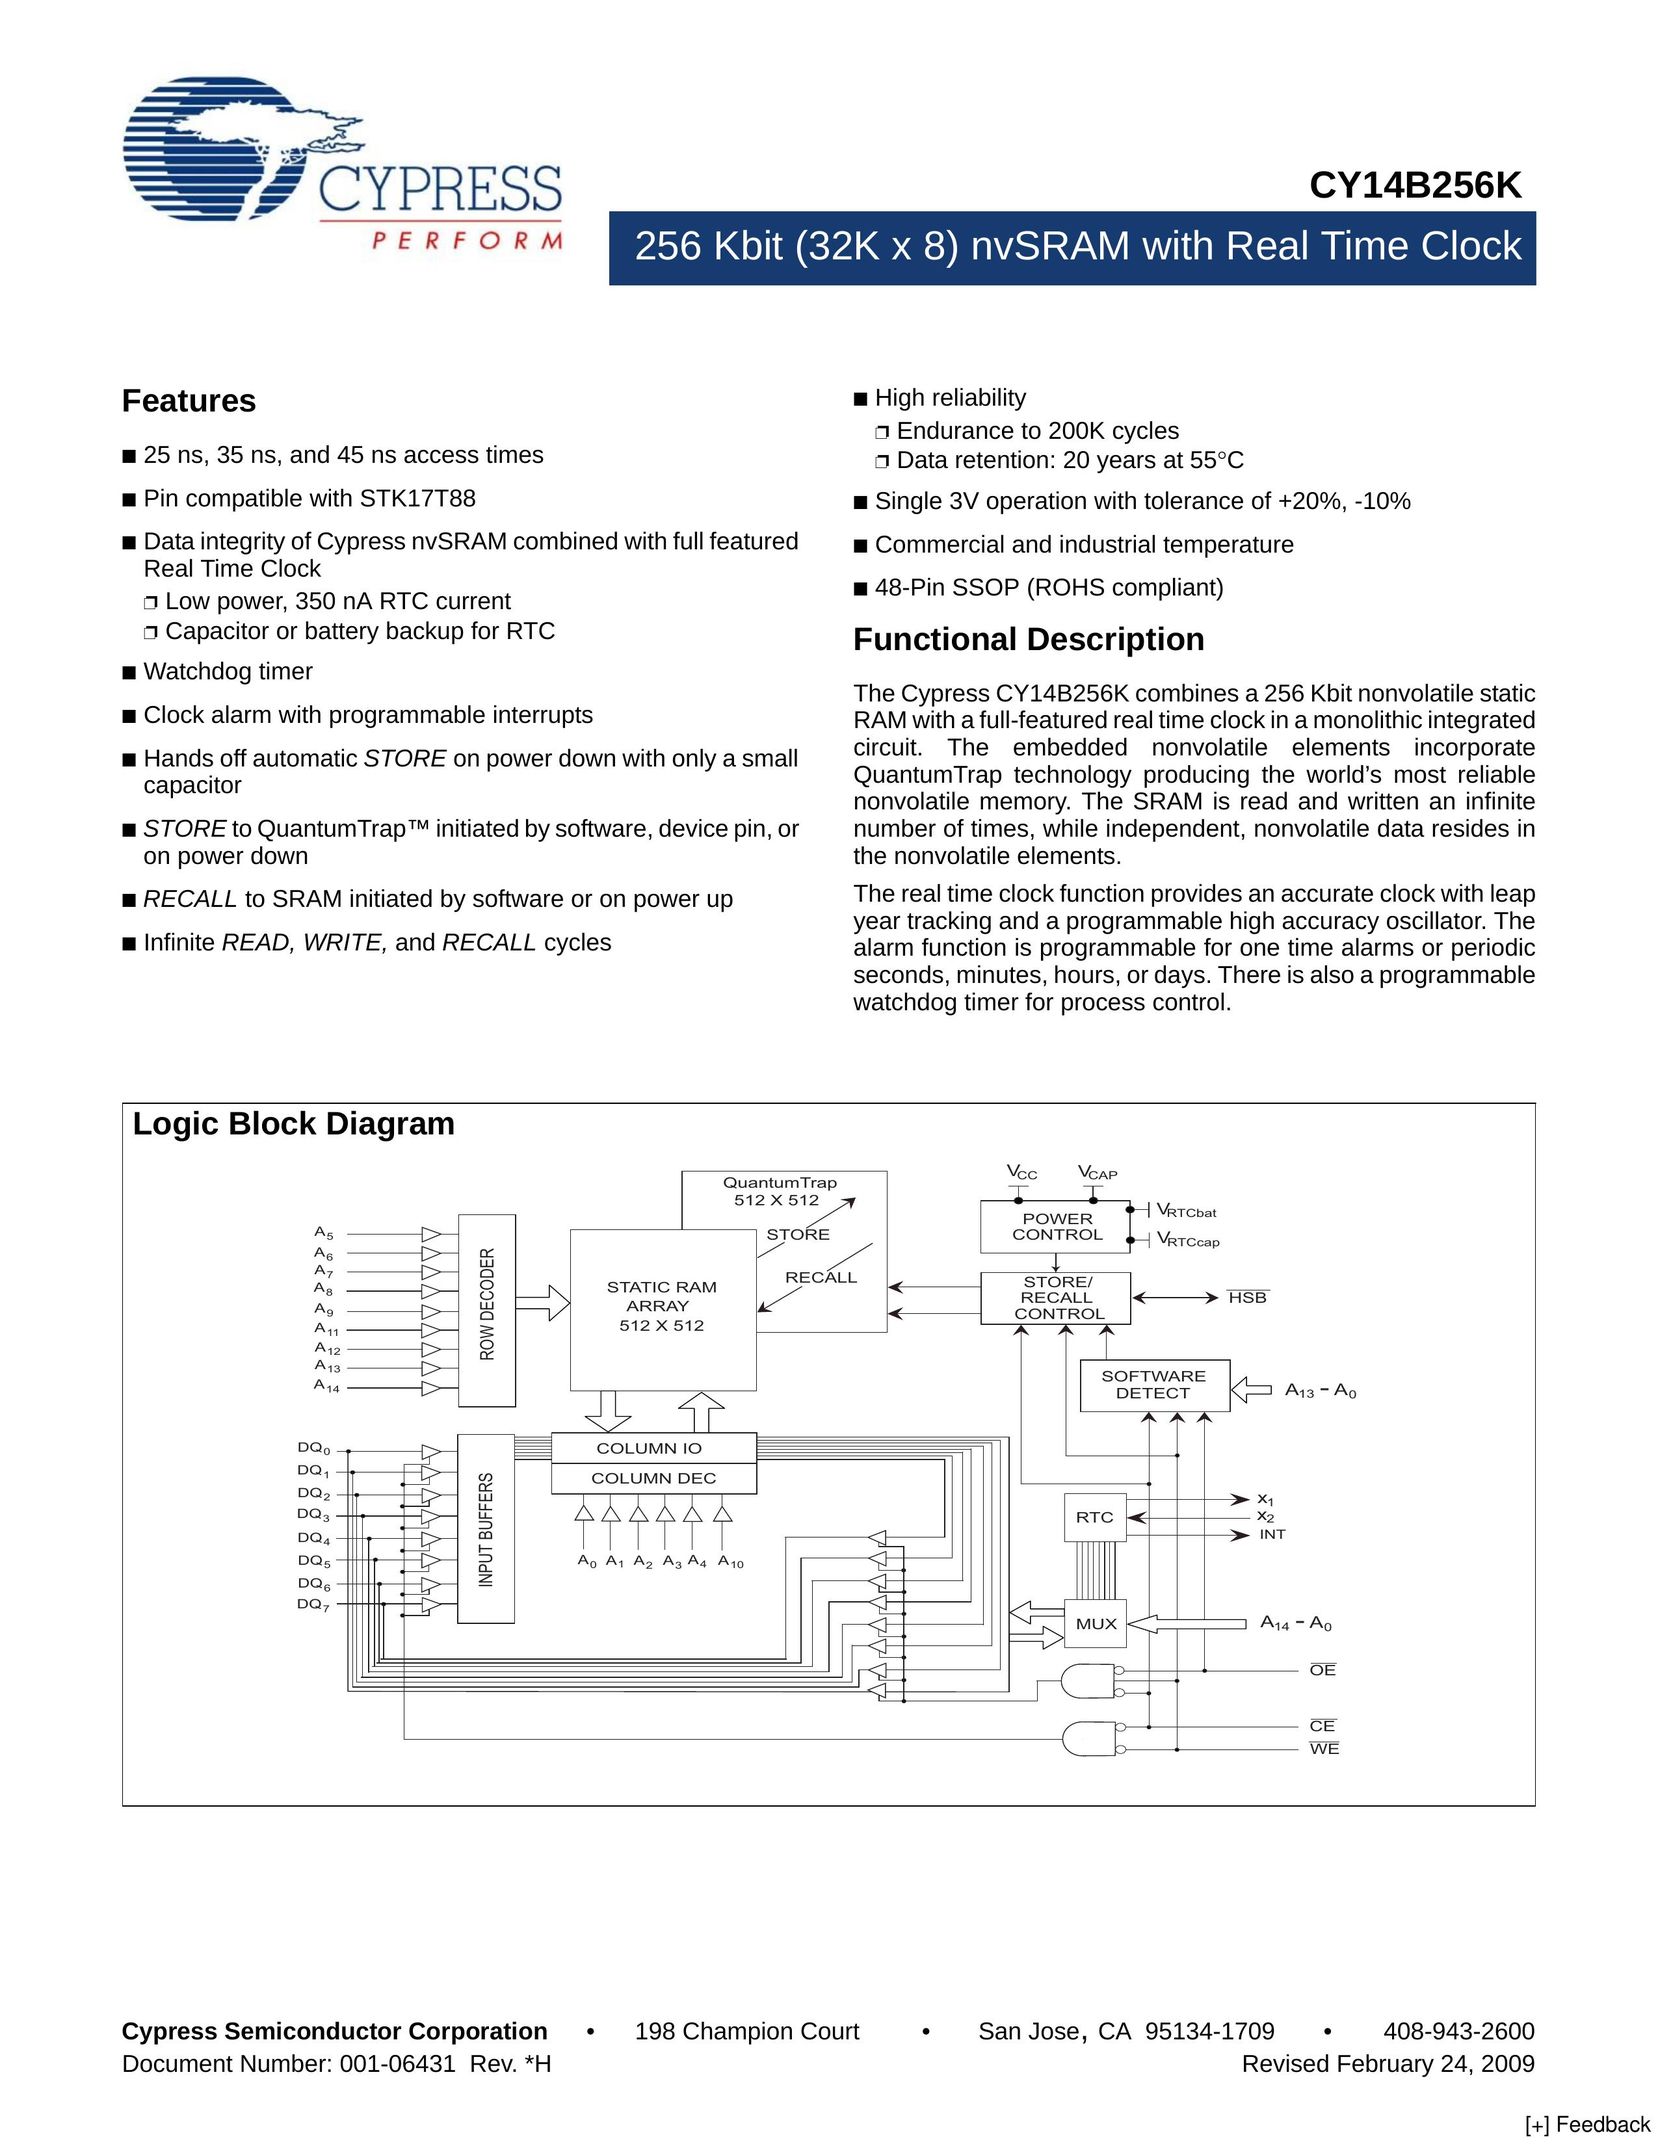 Cypress CY14B256K Computer Hardware User Manual